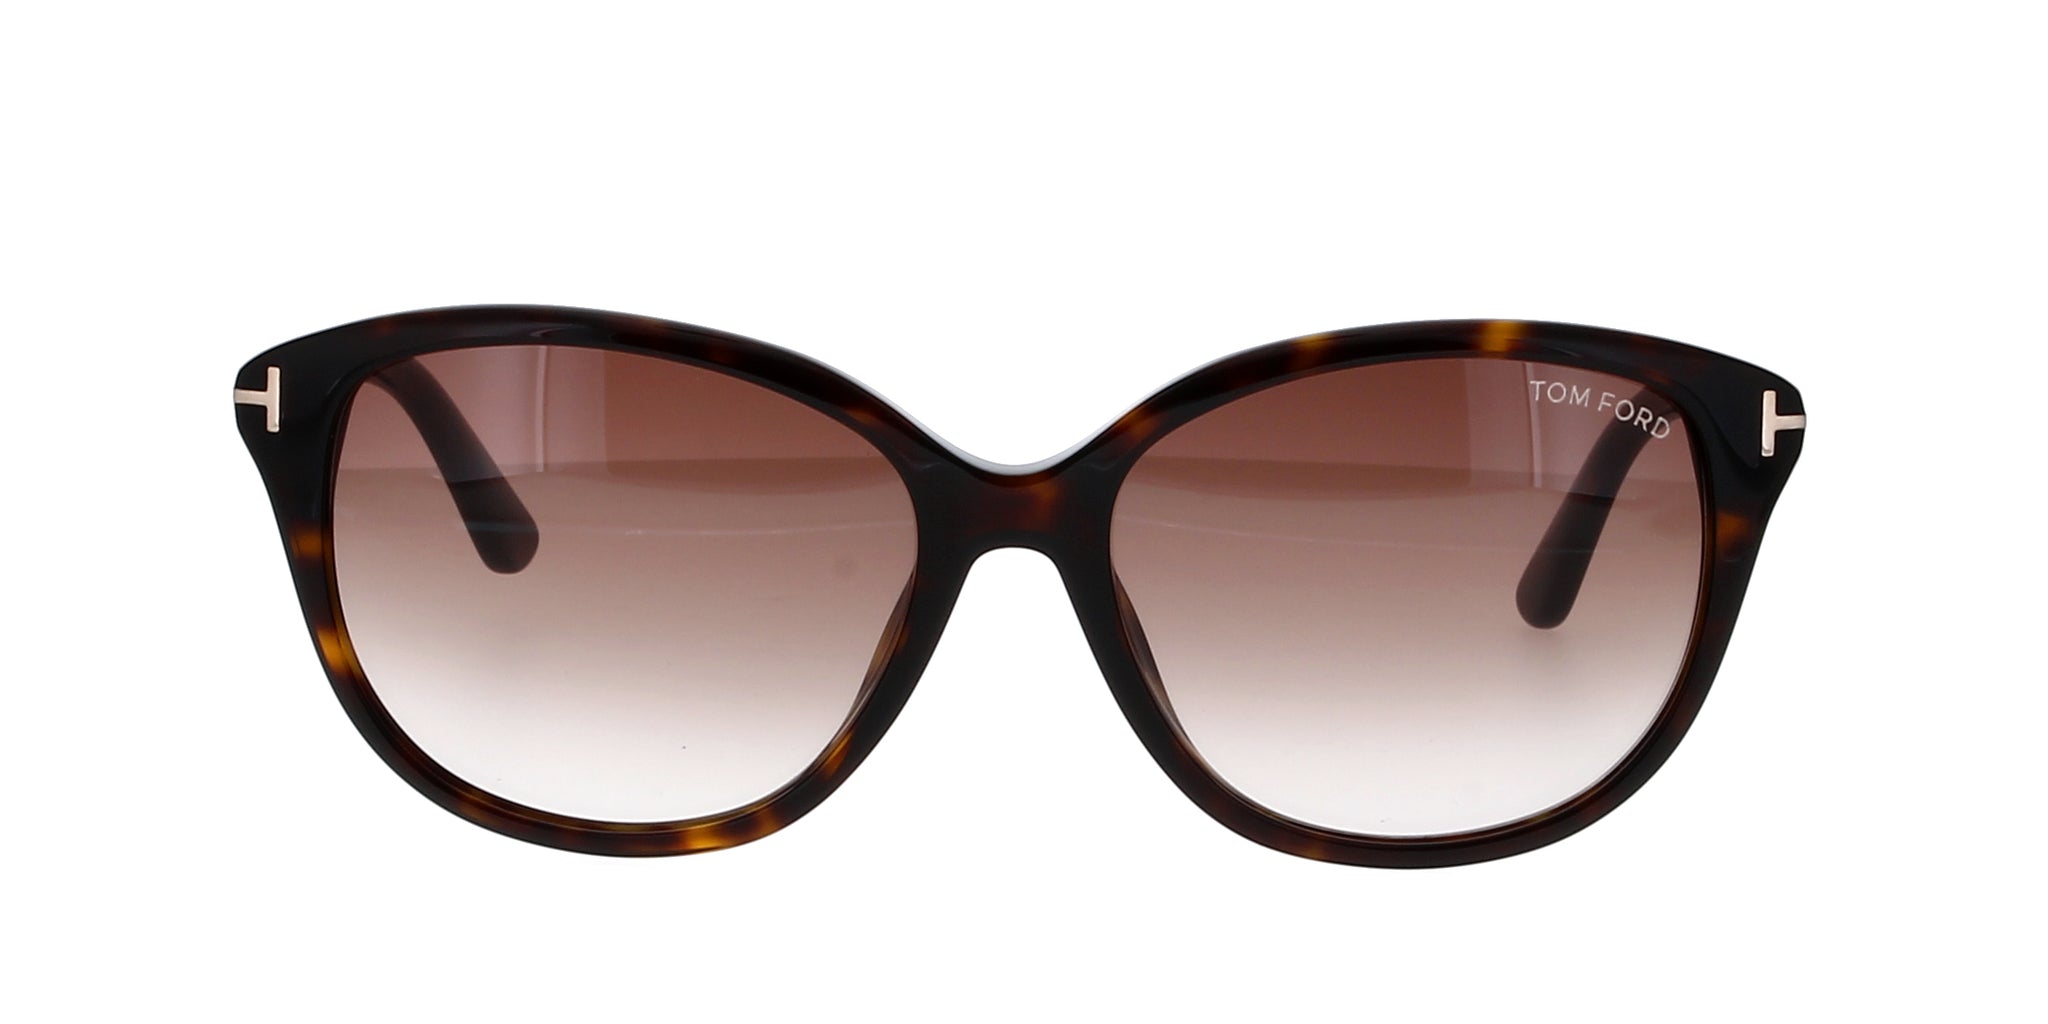 Tom Ford Karmen TF329 Sunglasses | Eyewear